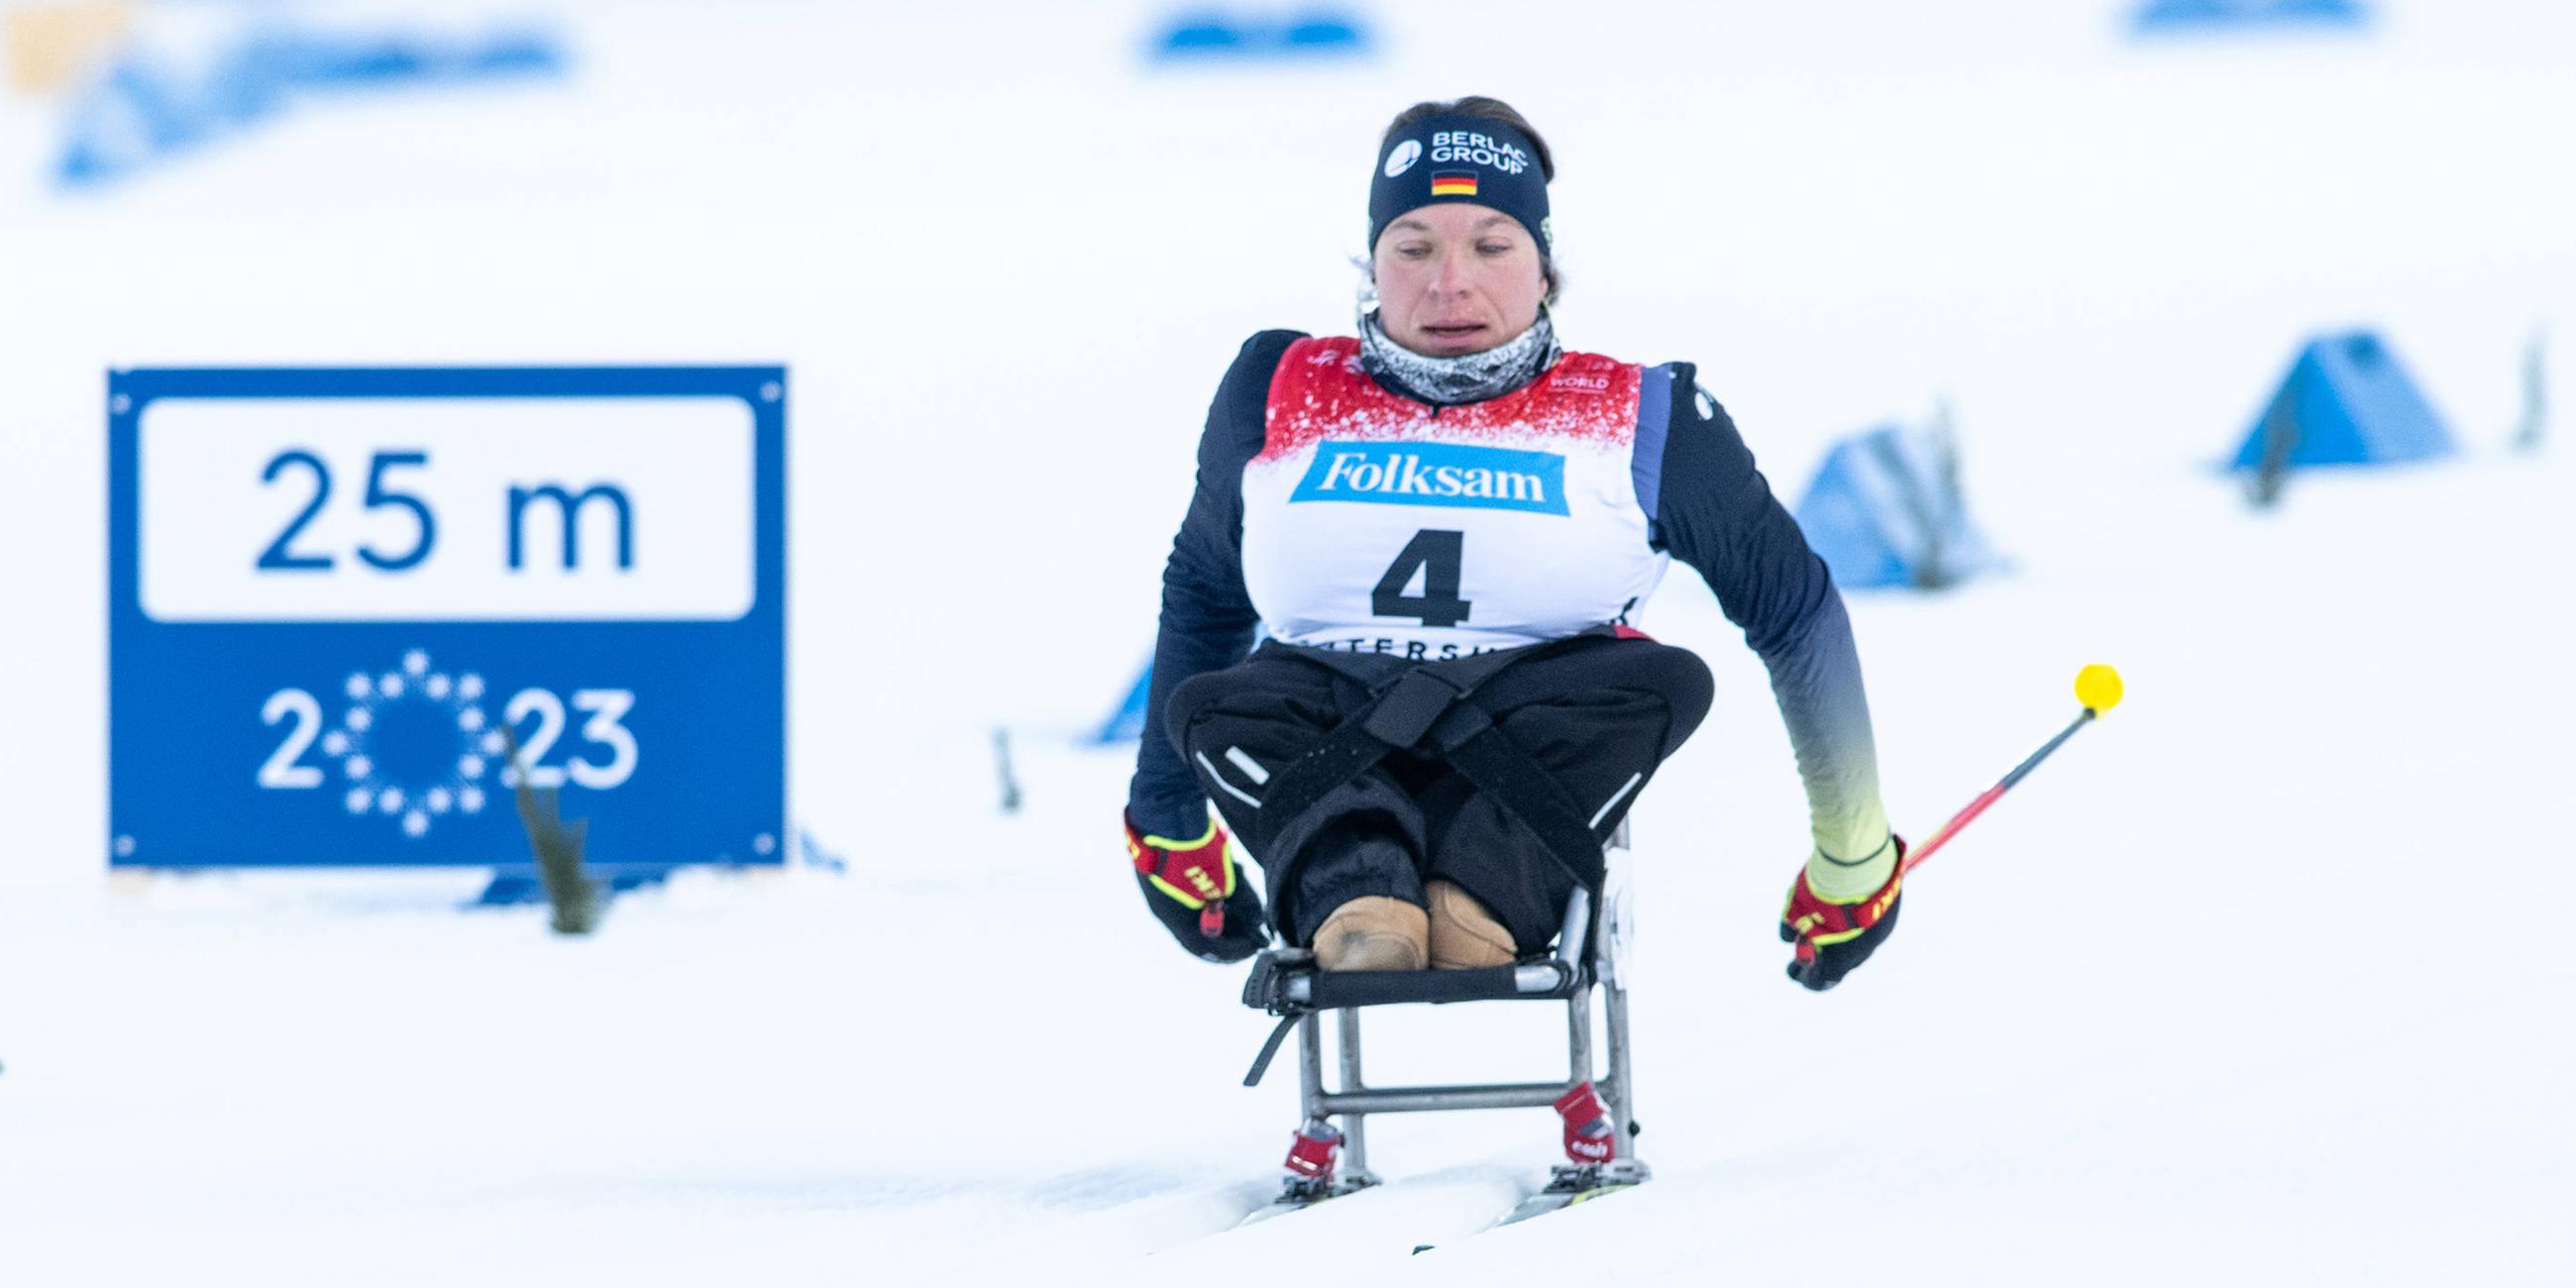 Langdistanz klassisch (18km) Anja Wicker gewinnt Silber. 